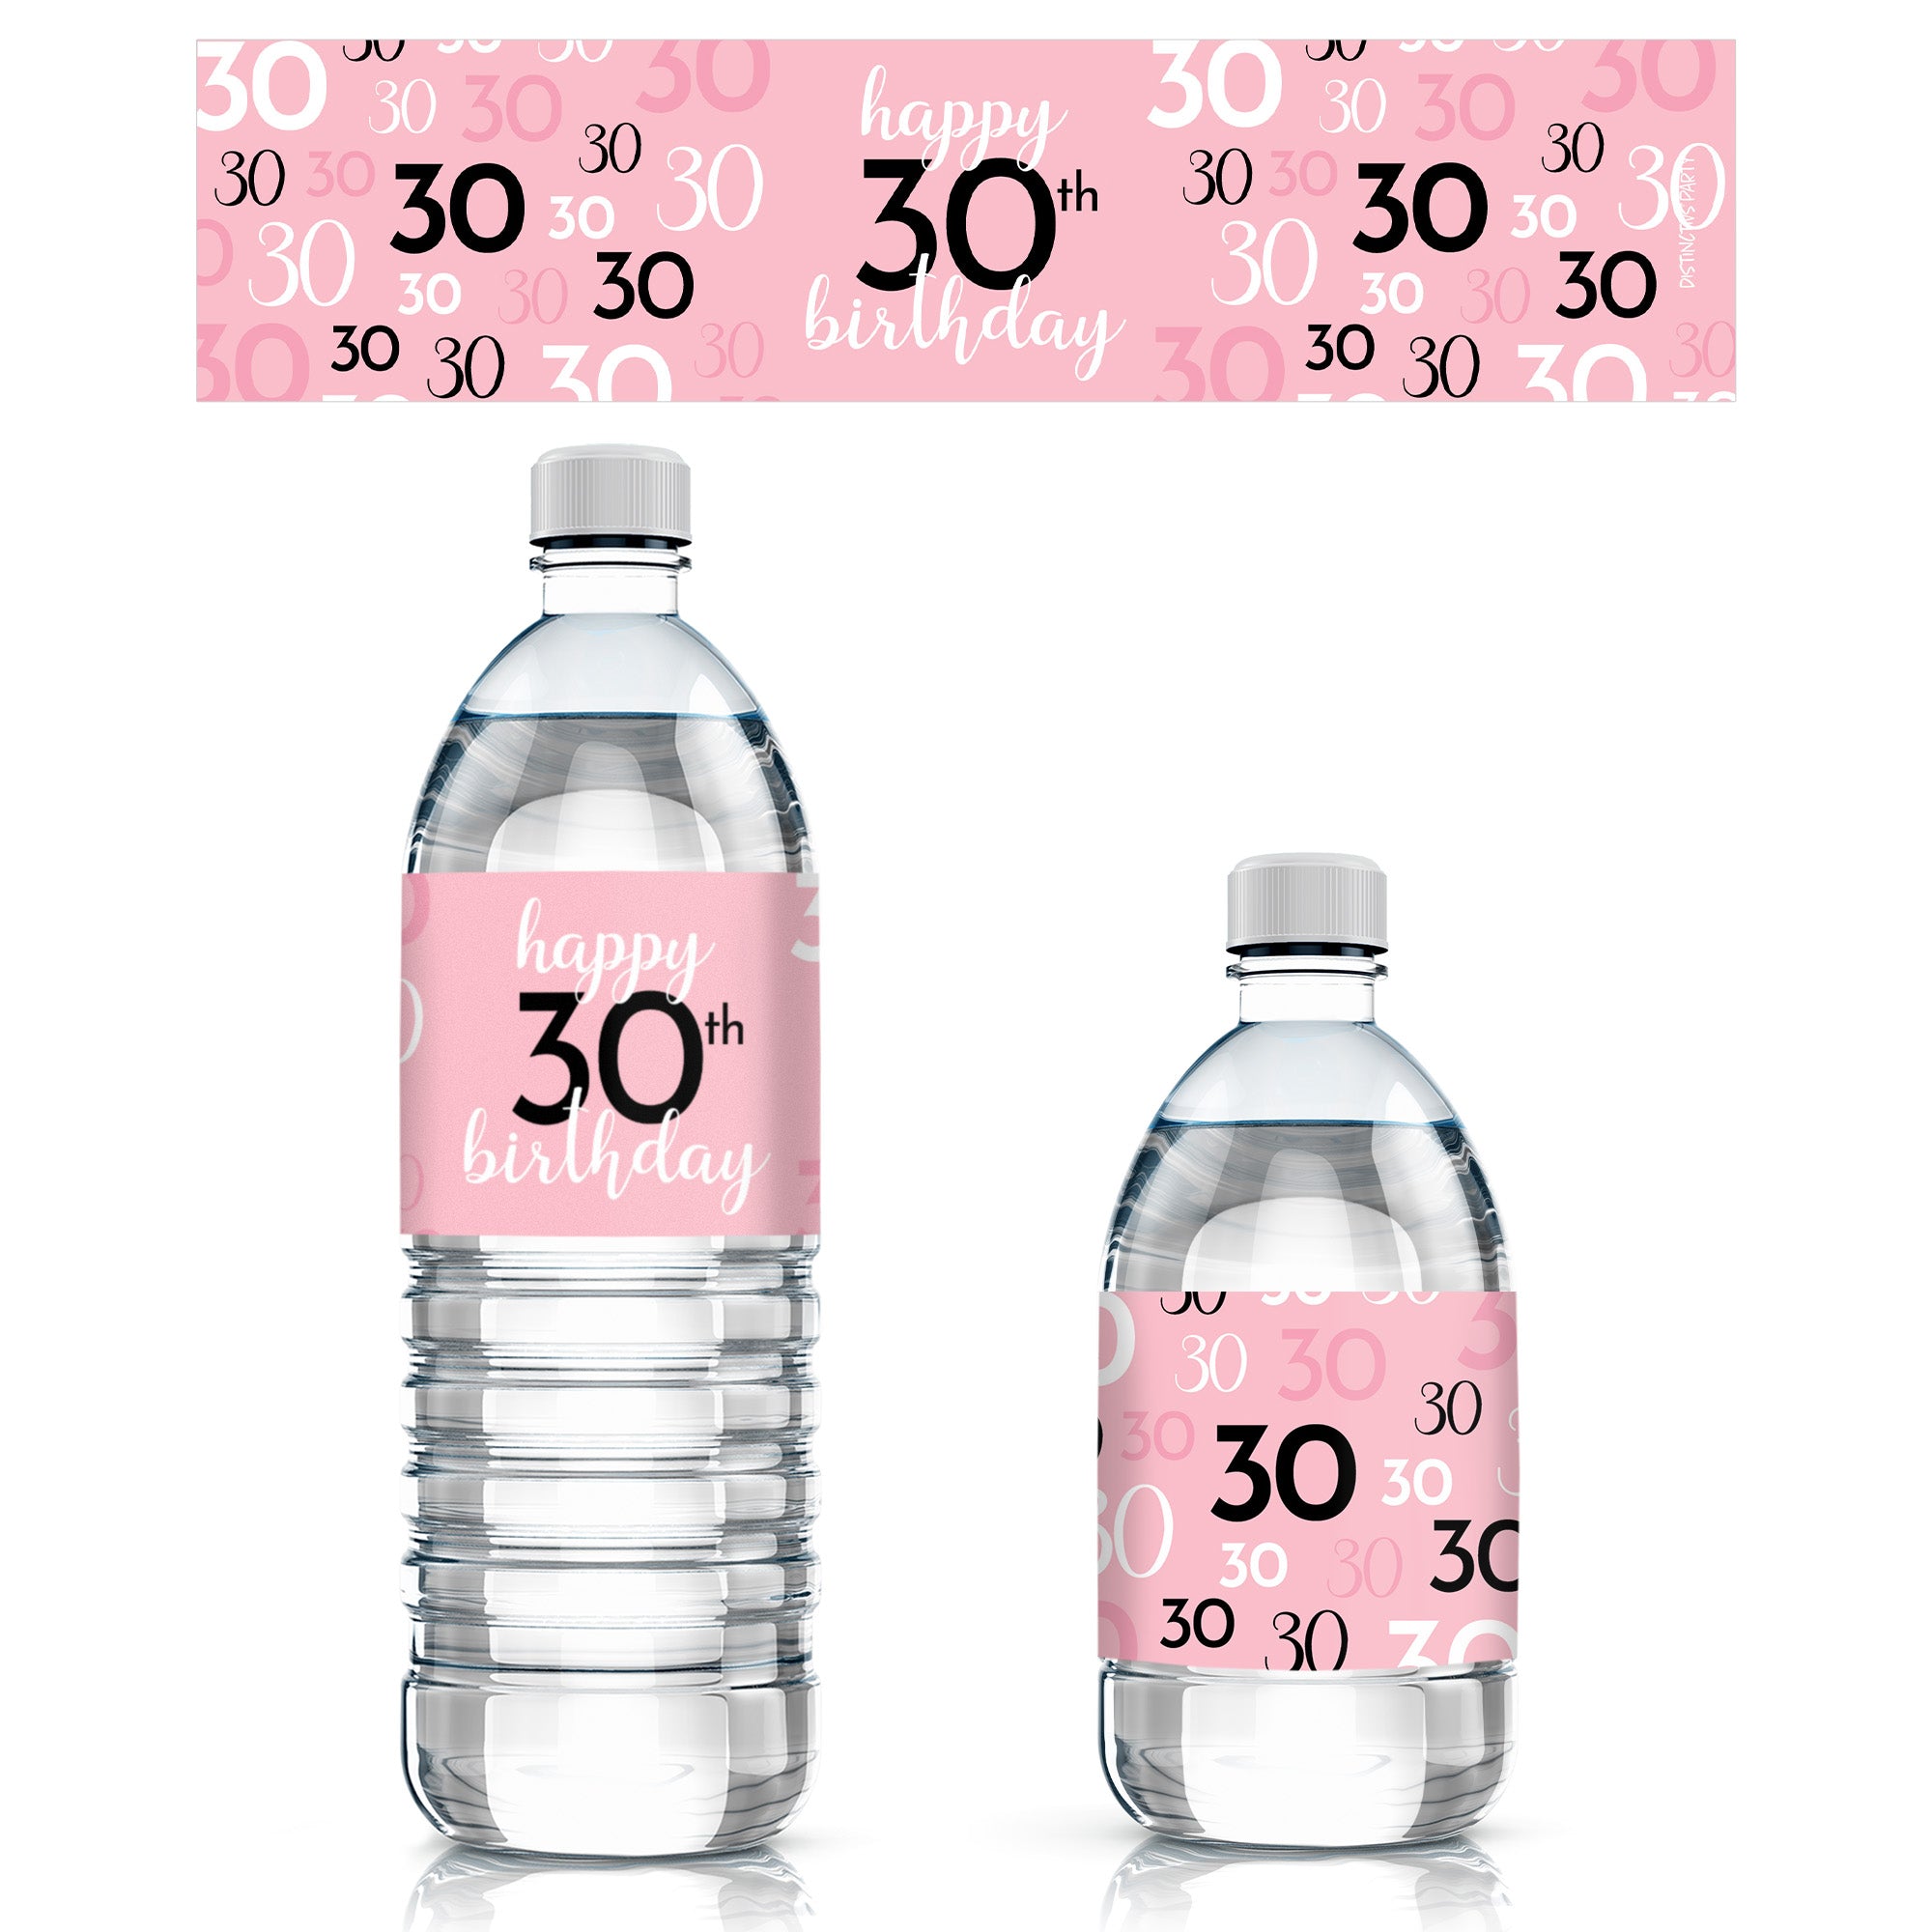 Christmas Flamingo Waterproof Water Bottle Wrappers